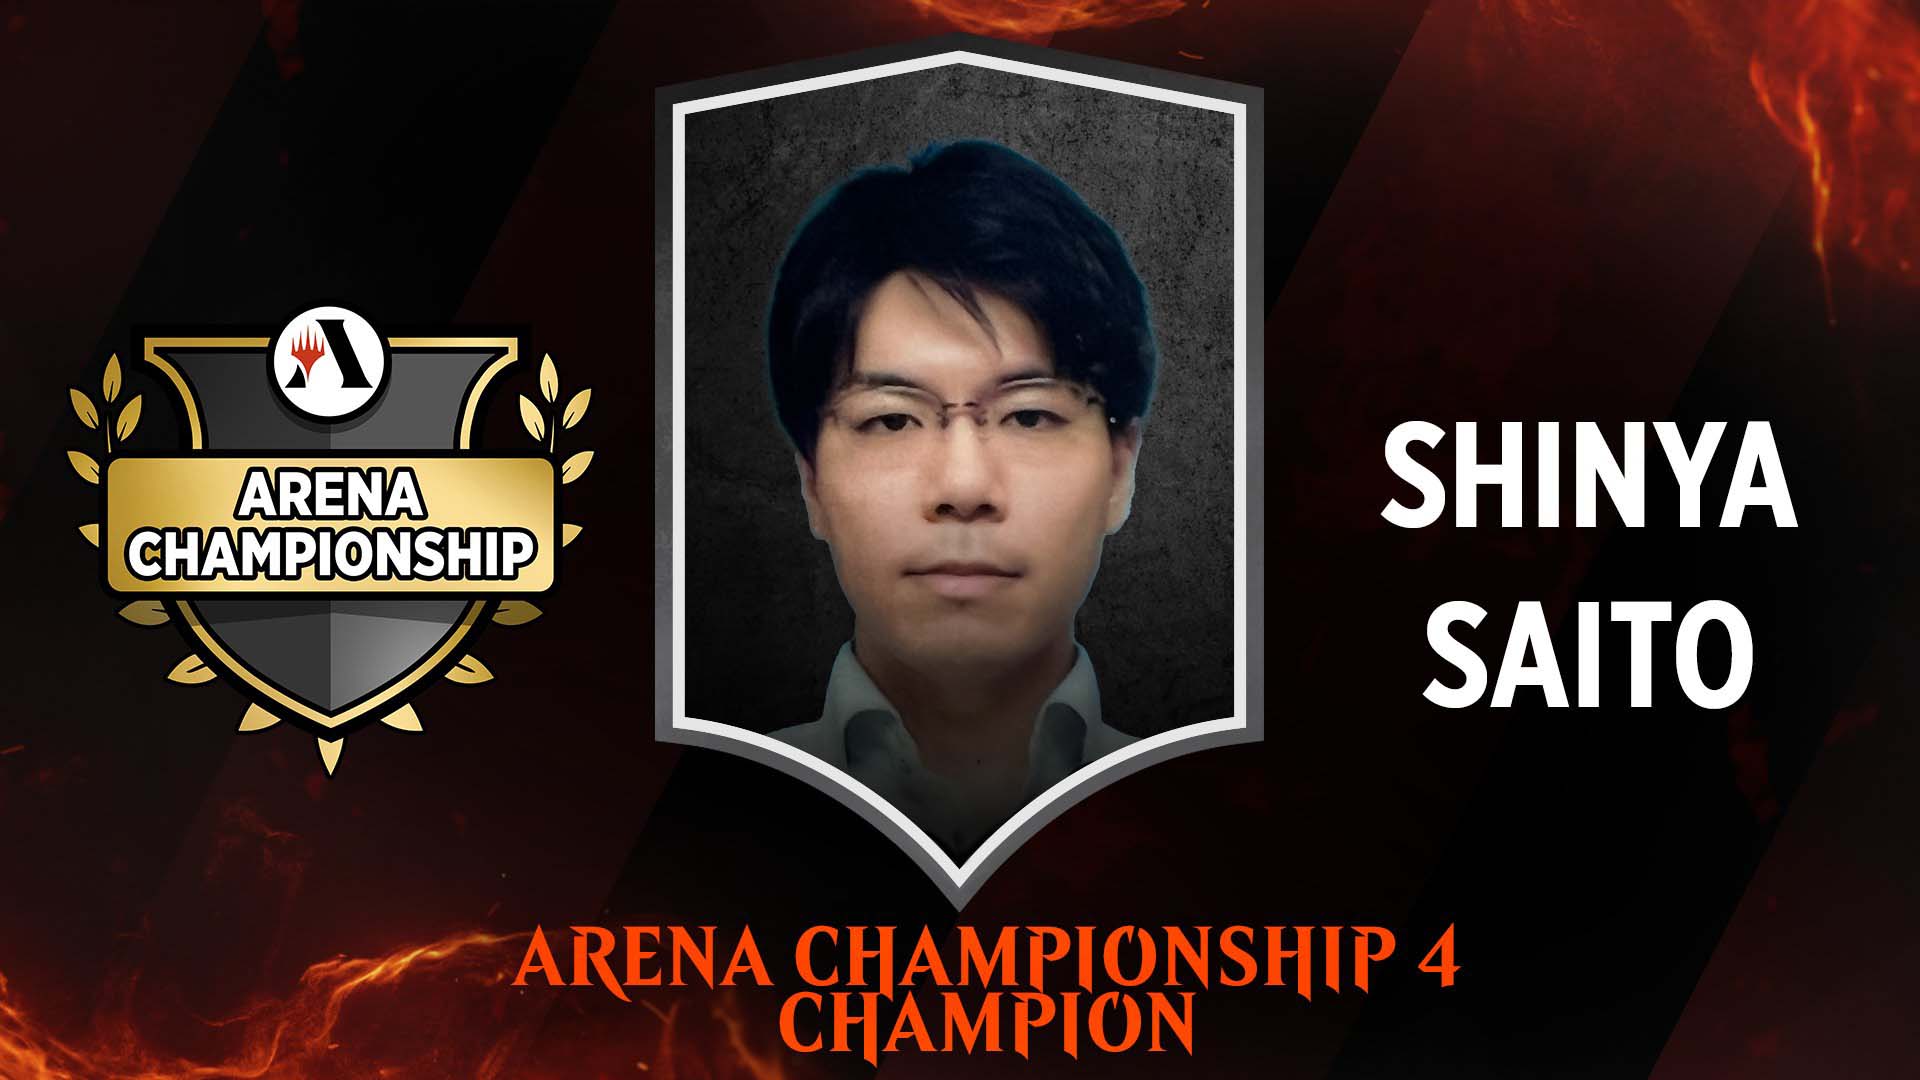 Winner of Arena Championship 4: Shinya Saito